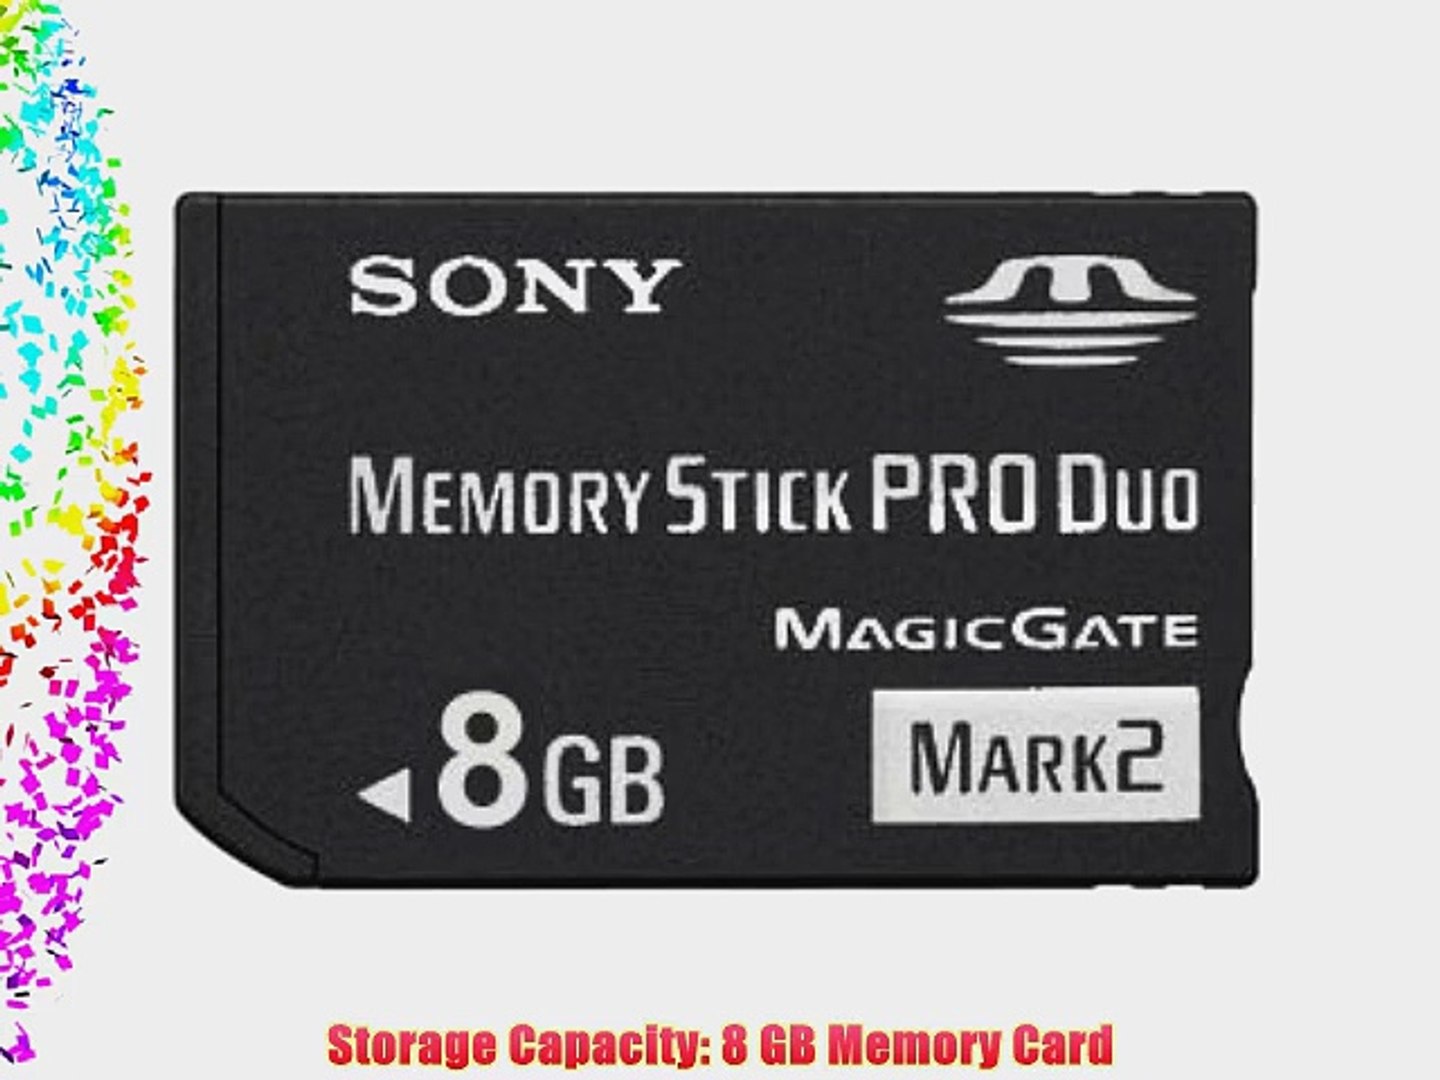 DSC-HX30 Digital Cameras MEMZI PRO 64GB Class 10 80MB/s SDXC Memory Card for Sony Cyber-Shot DSC-HX100 DSC-HX90 DSC-HX50V DSC-HX60 DSC-HX30V DSC-HX50 DSC-HX60V DSC-HX90V DSC-HX80